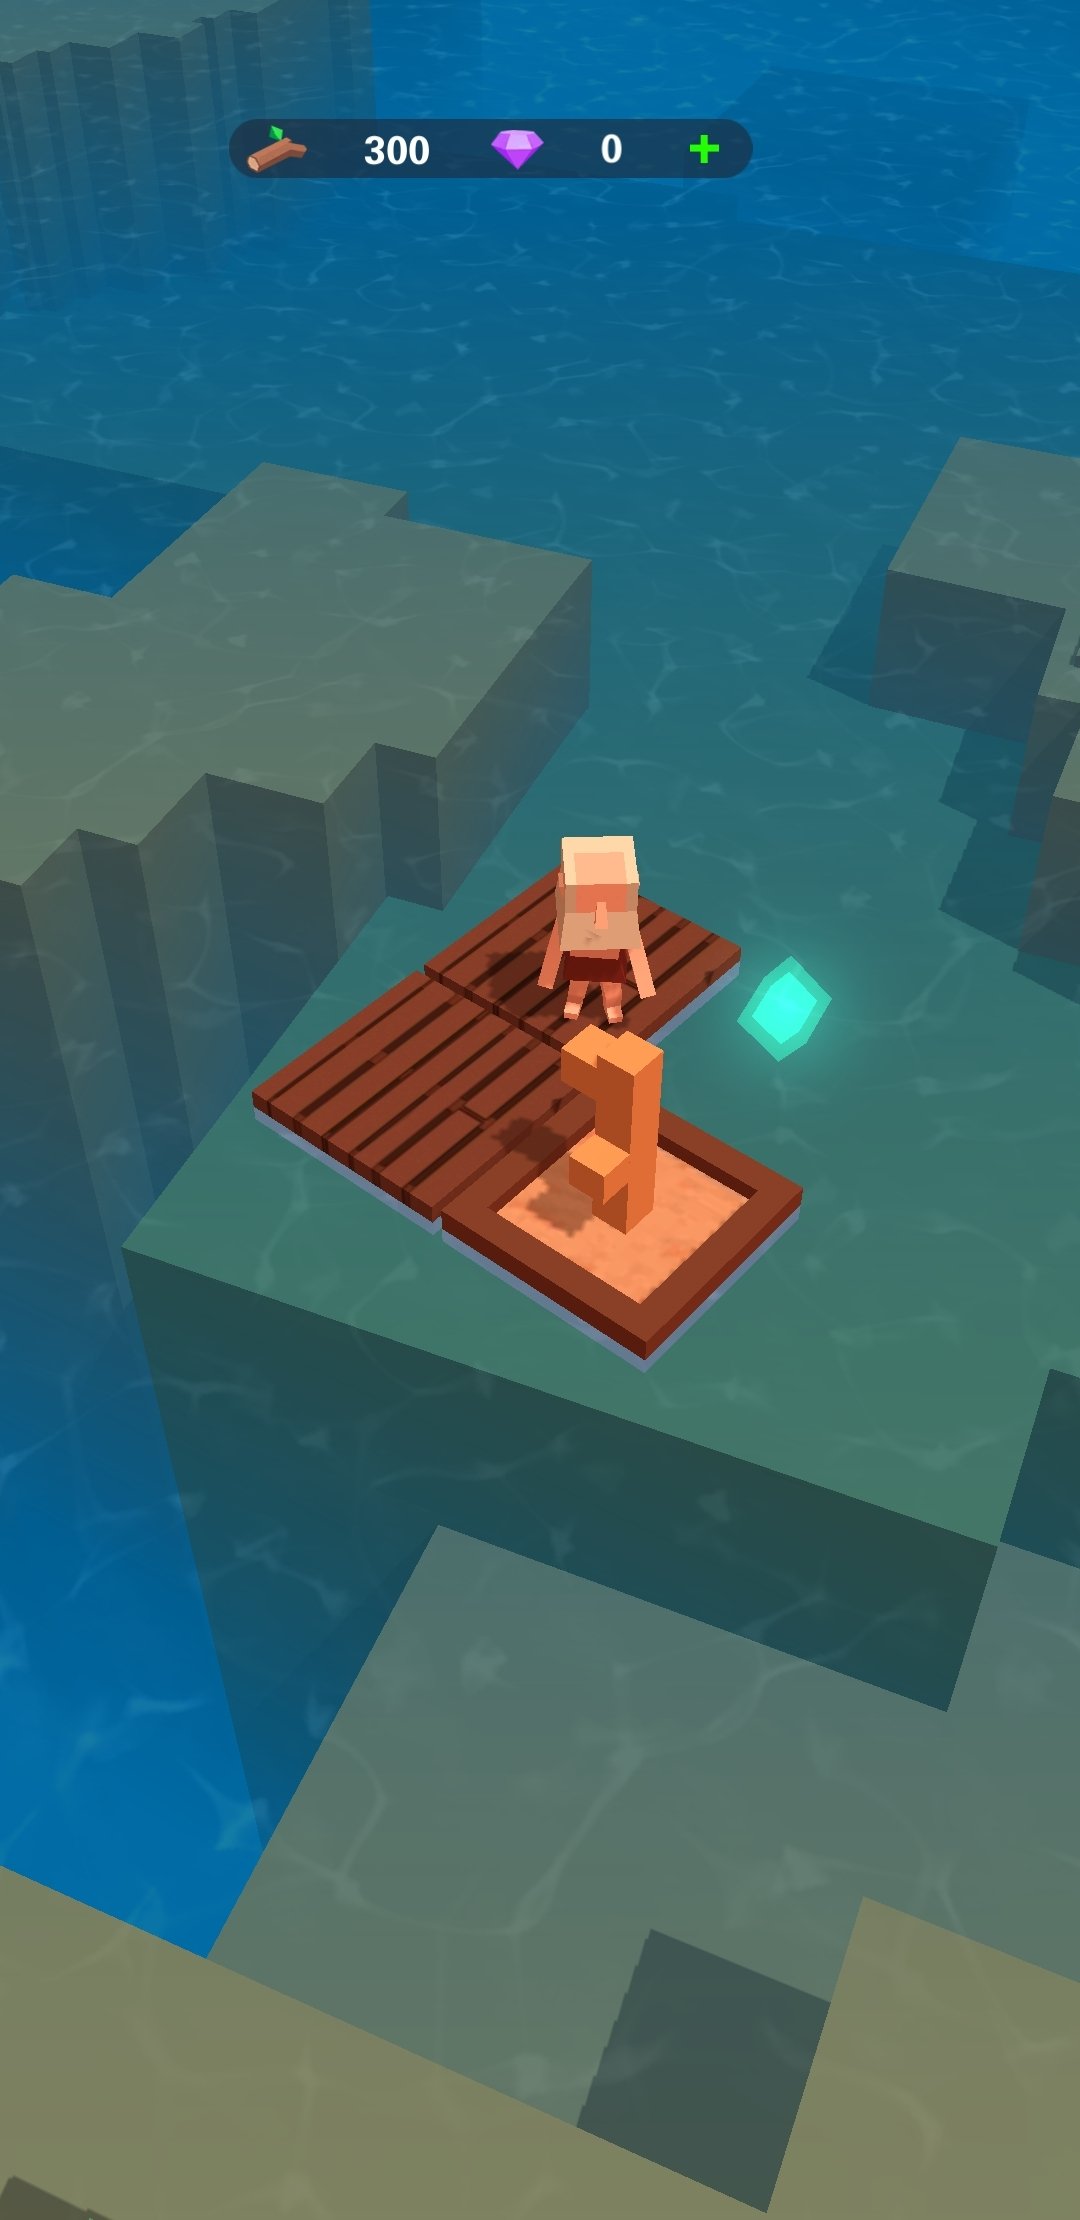 Idle Arks: Build at Sea para Android - Download